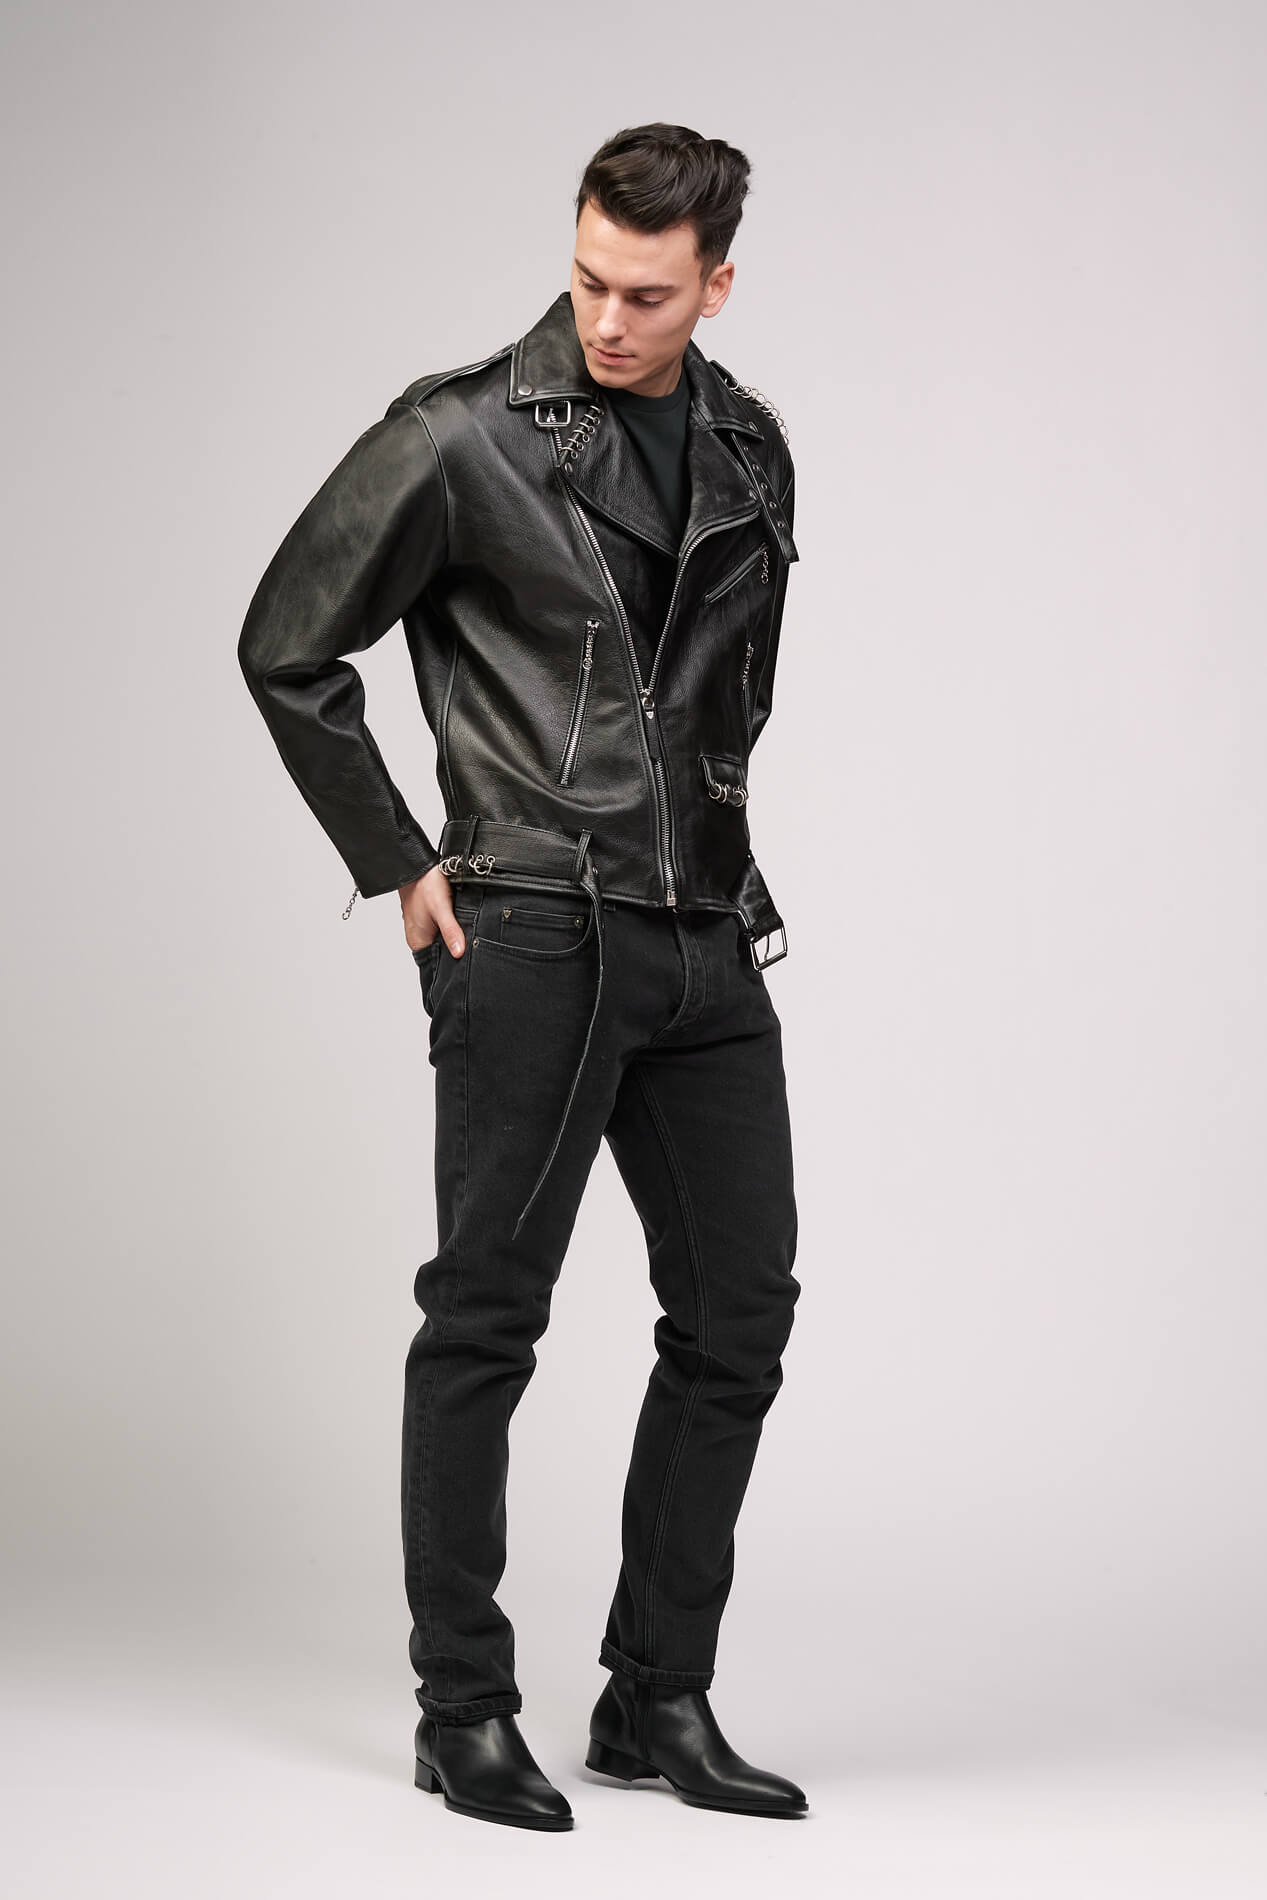 SLIM VINTAGE BLACK Slim fit jeans in black denim, 5 pockets, hidden front button closure. Metallic logo detail on the back. 98% cotton 2% elastane. Made in Italy. HTC LOS ANGELES